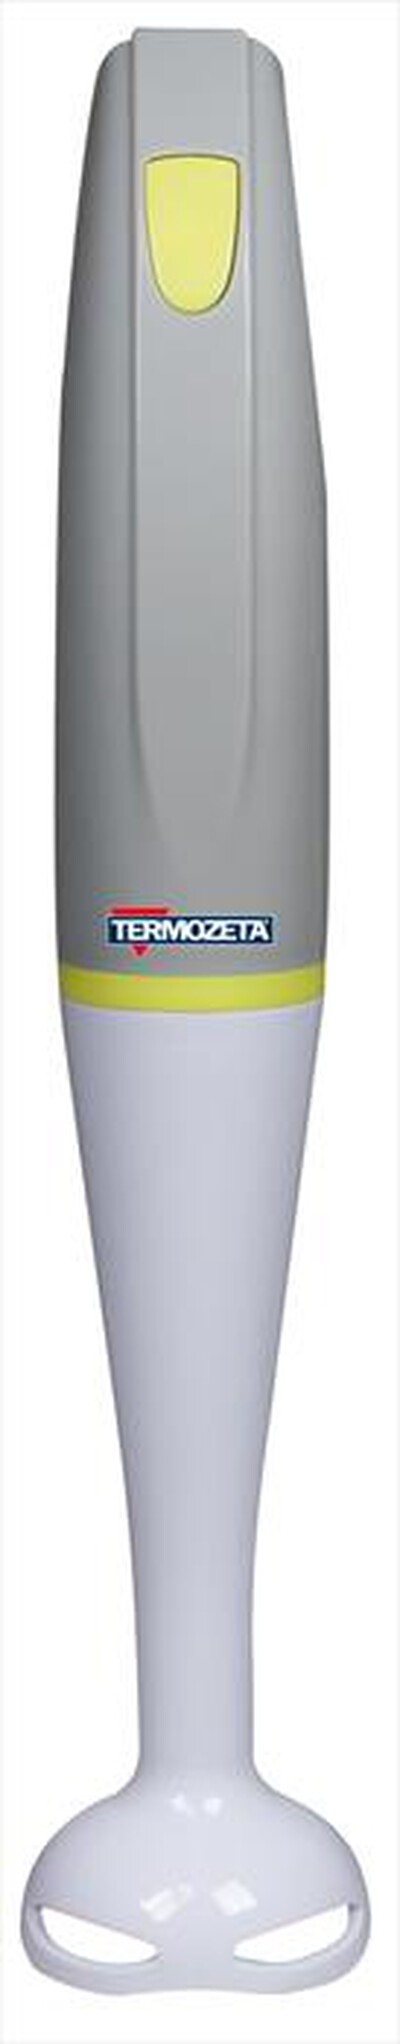 TERMOZETA - 76037 - BIANCO